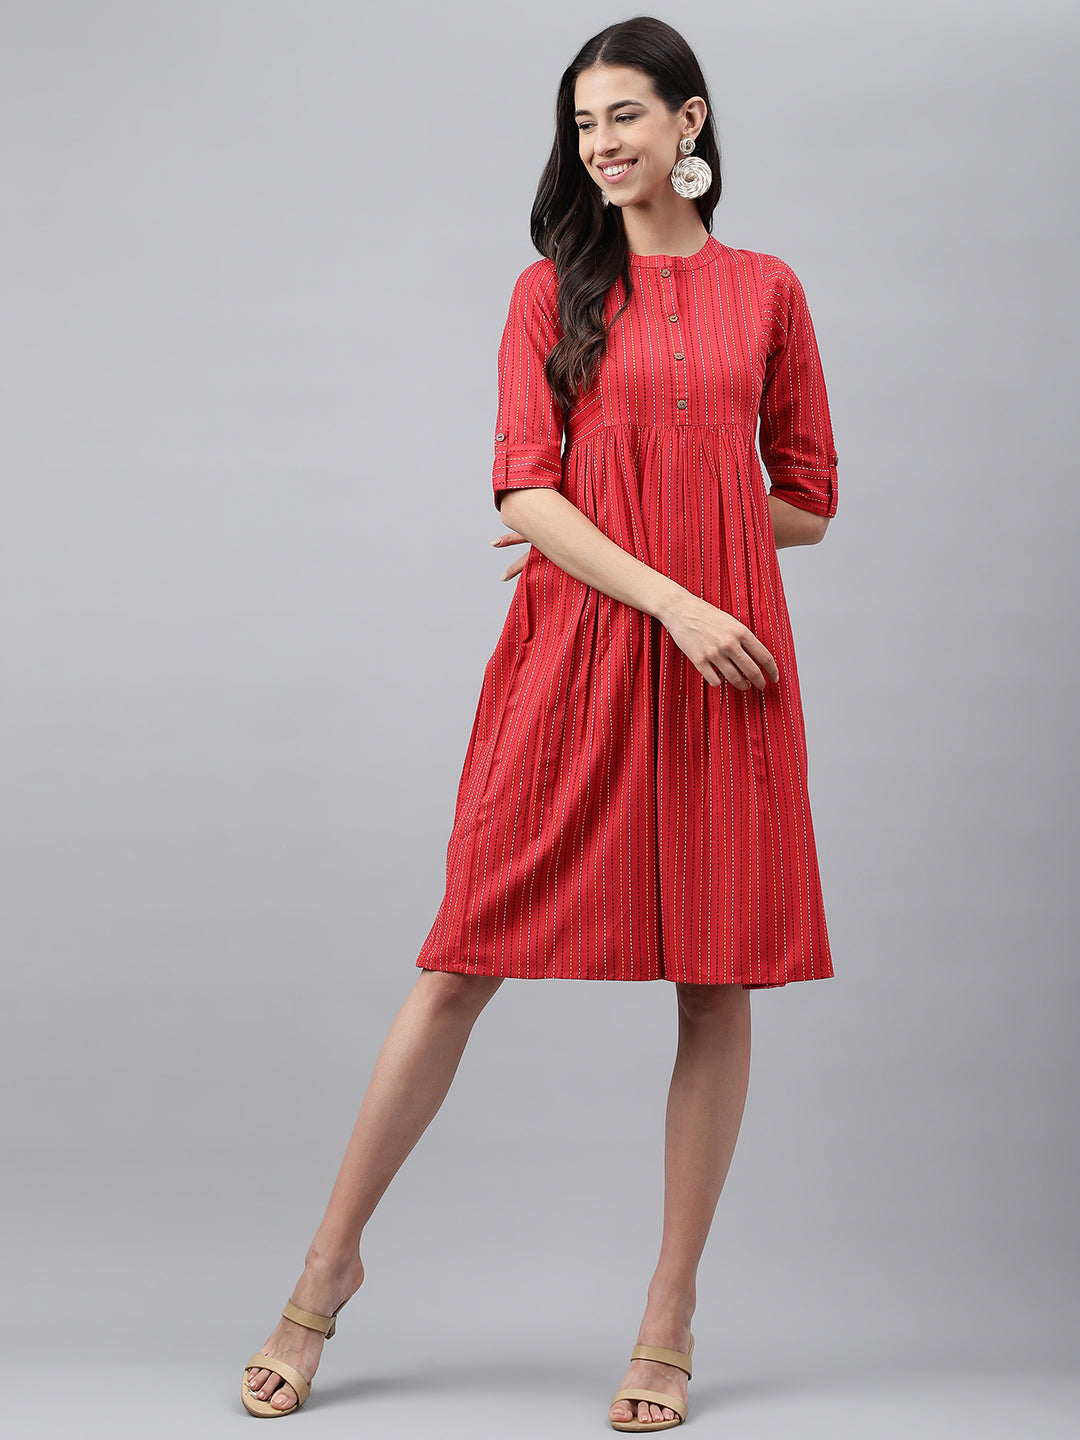 Women's Woven Design Red Cotton Dress - Janasya